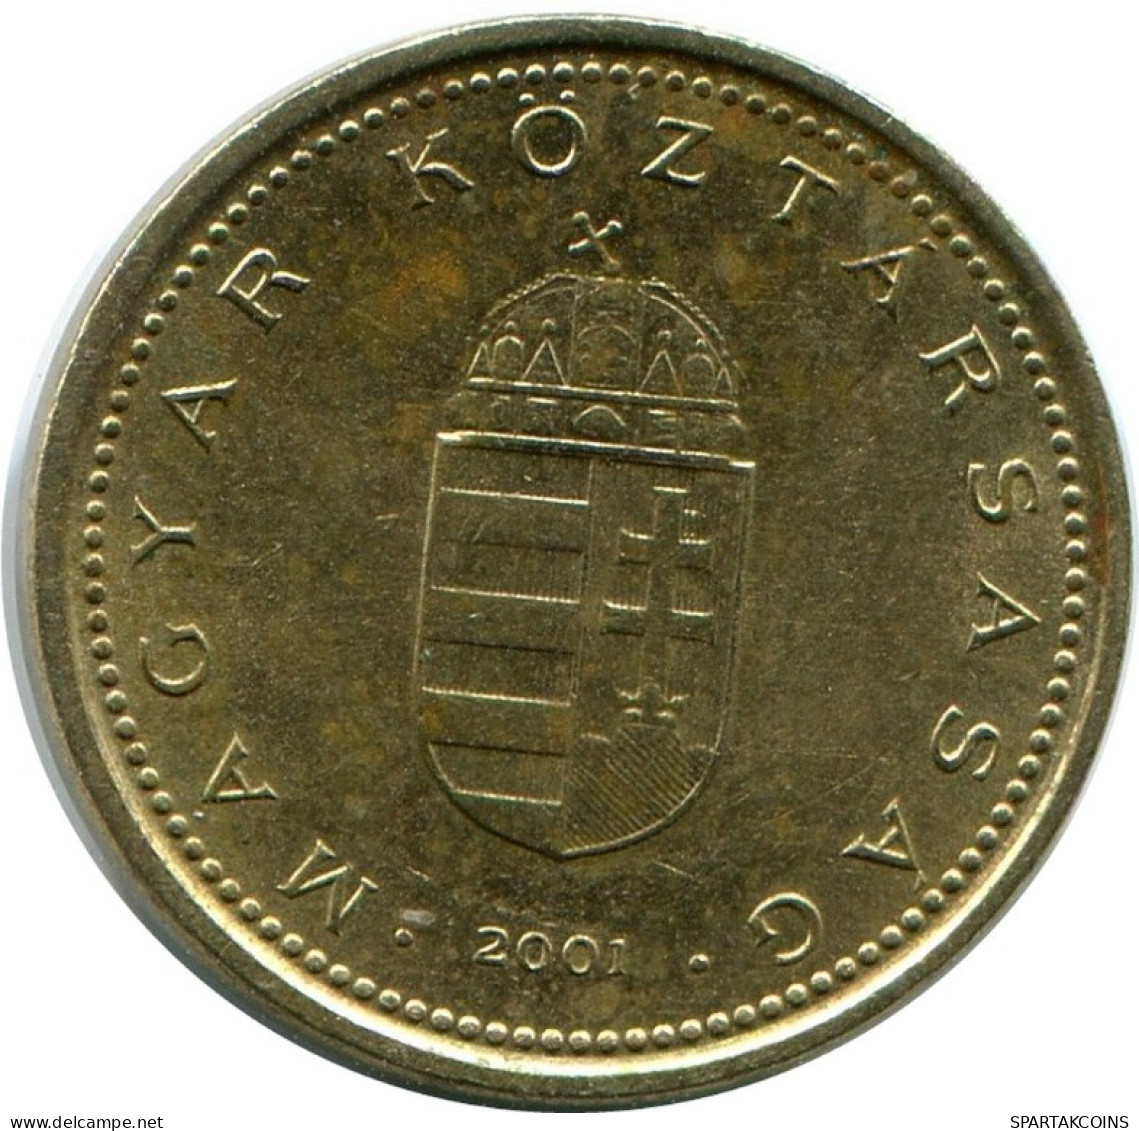 1 FORINT 2001 HUNGARY Coin #AH922.U.A - Hongrie